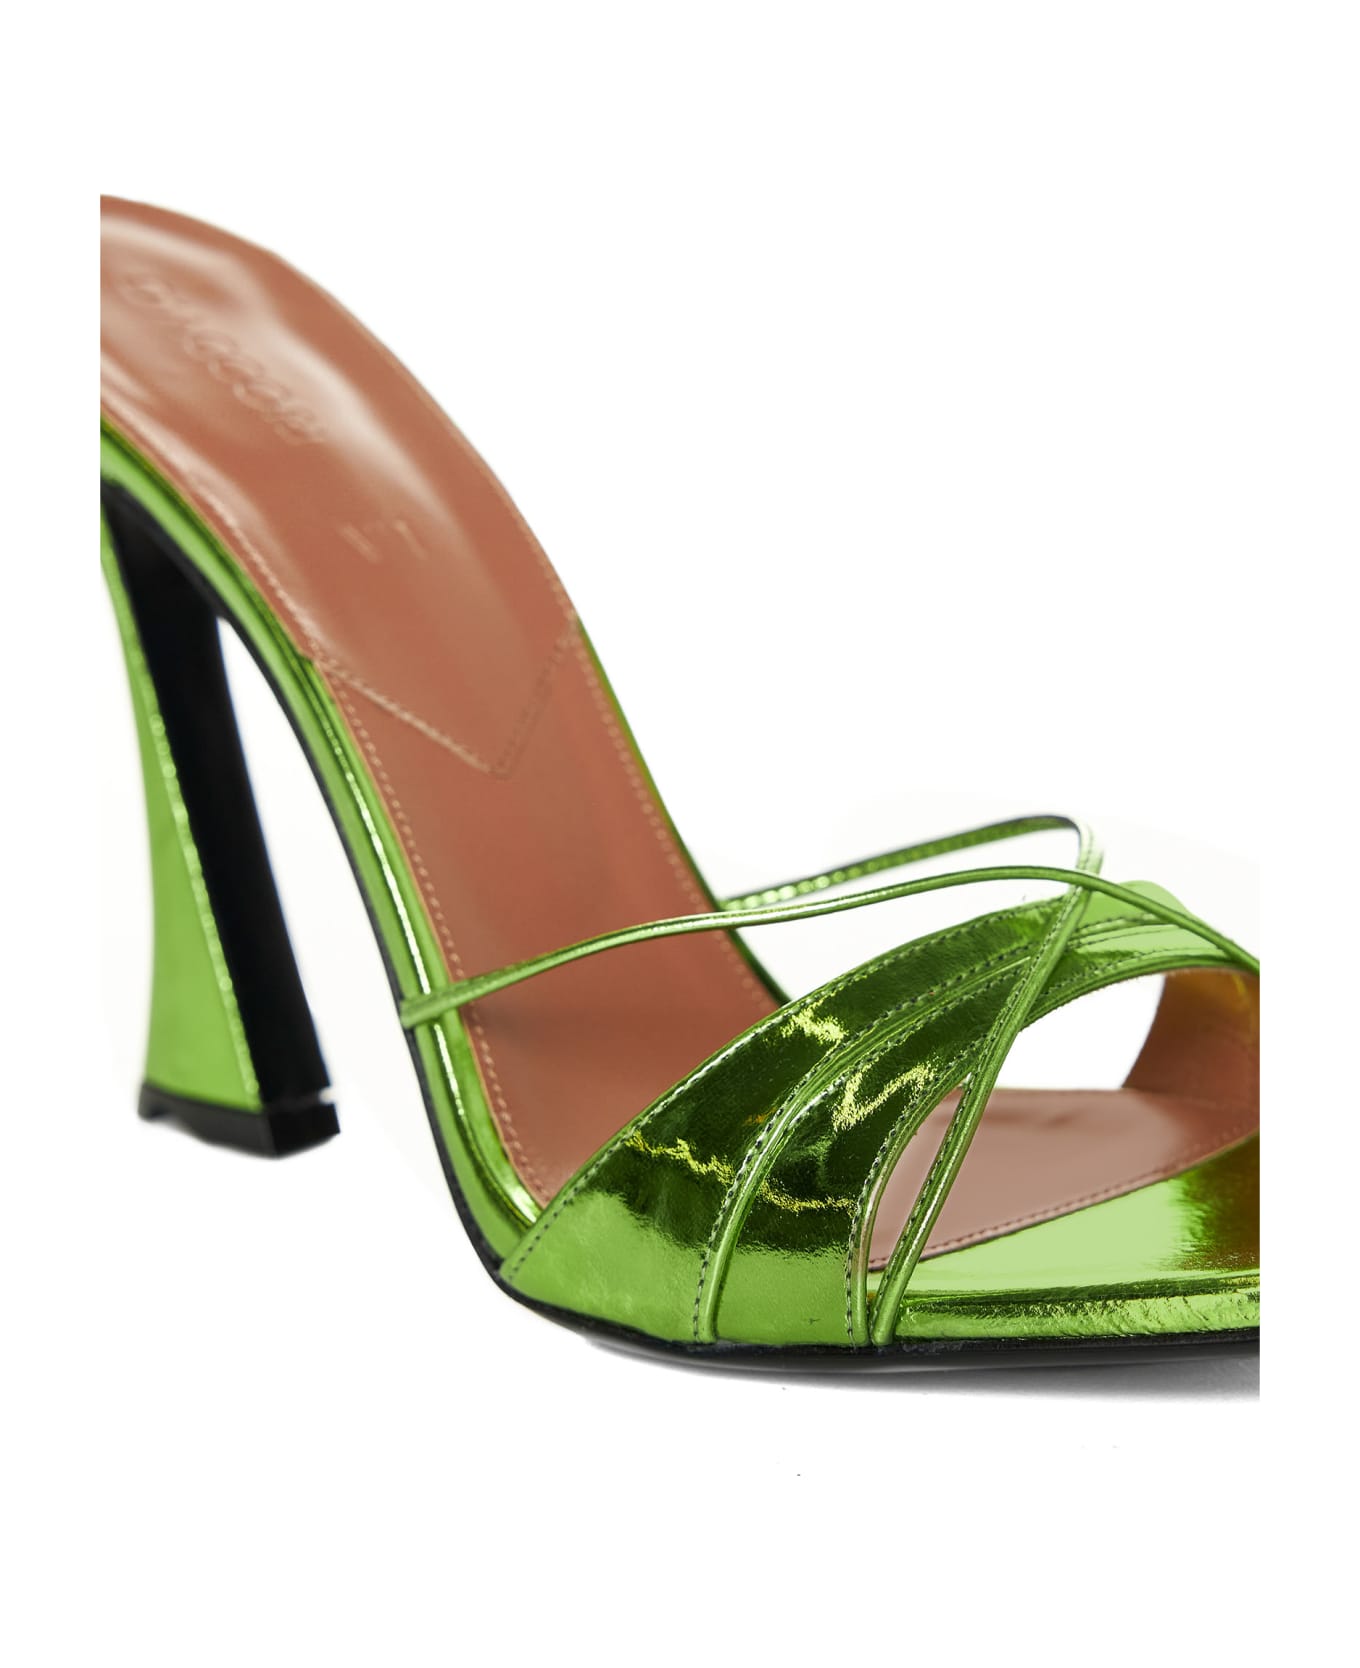 D'Accori Sandals - Chameleon green